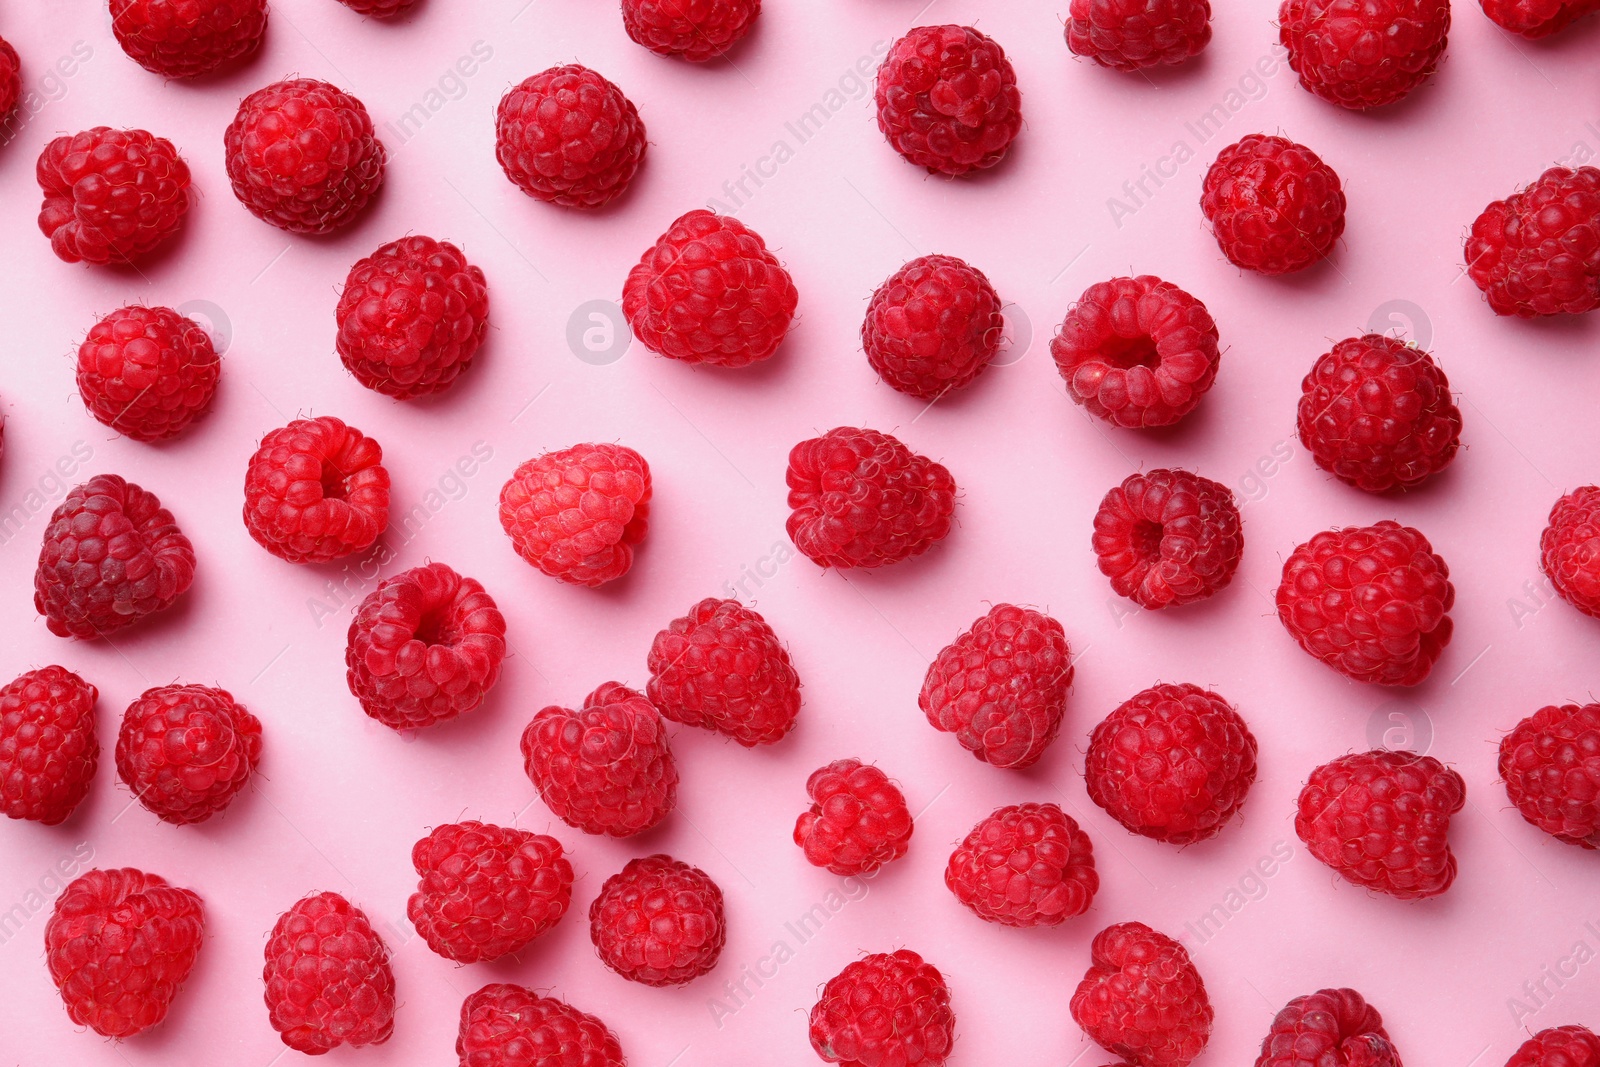 Photo of Tasty ripe raspberries on pink background, flat lay